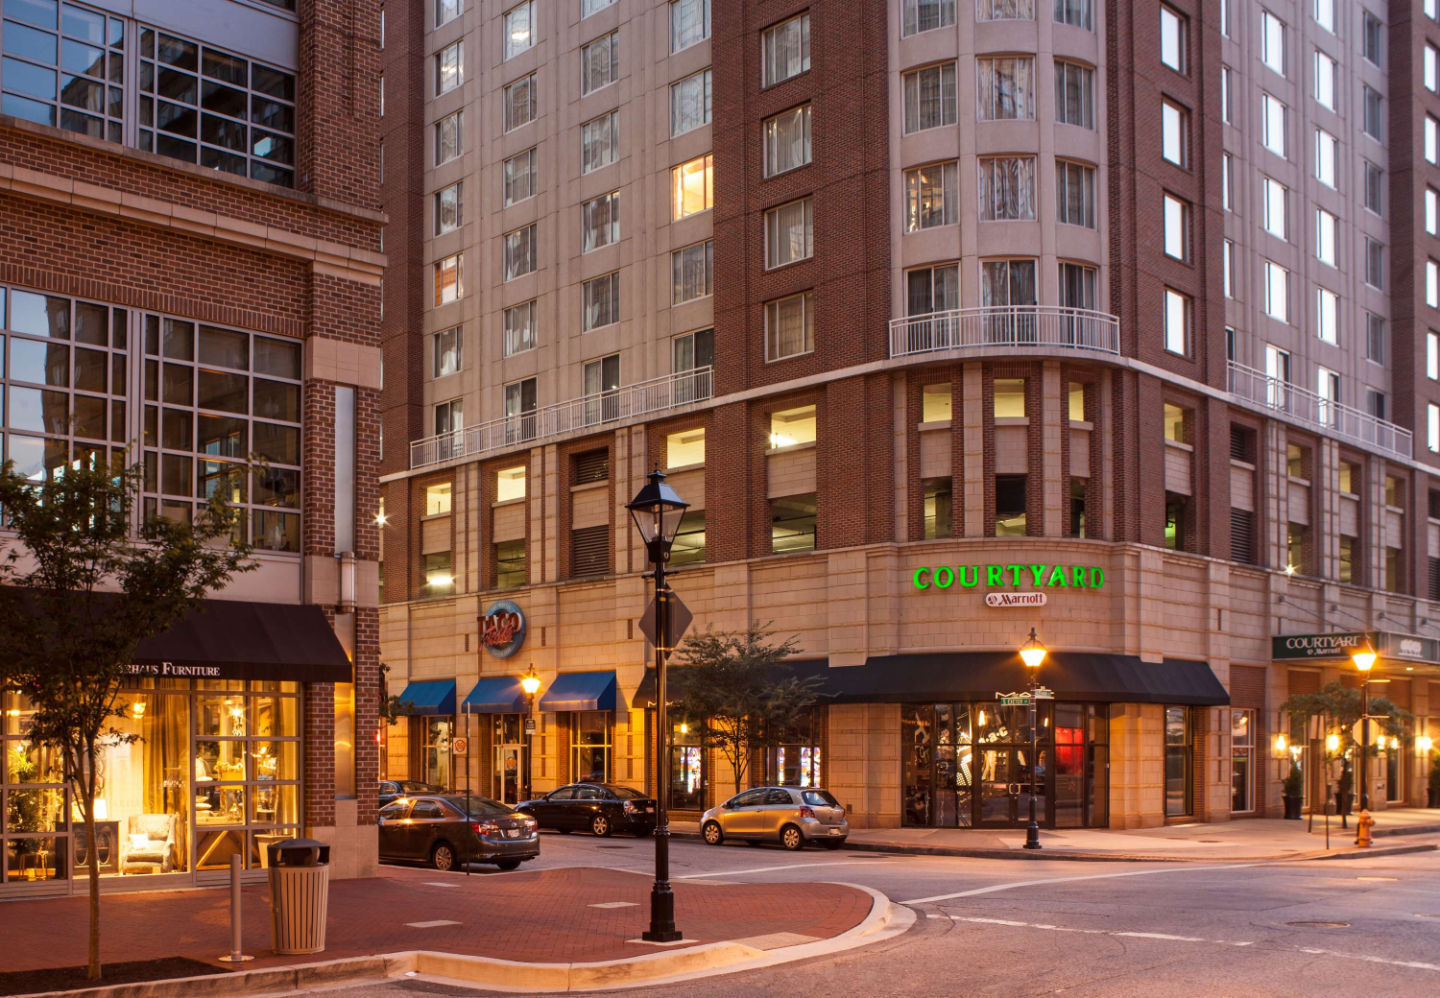 Cheap Hotels In Baltimore Harbor - daticaldesign